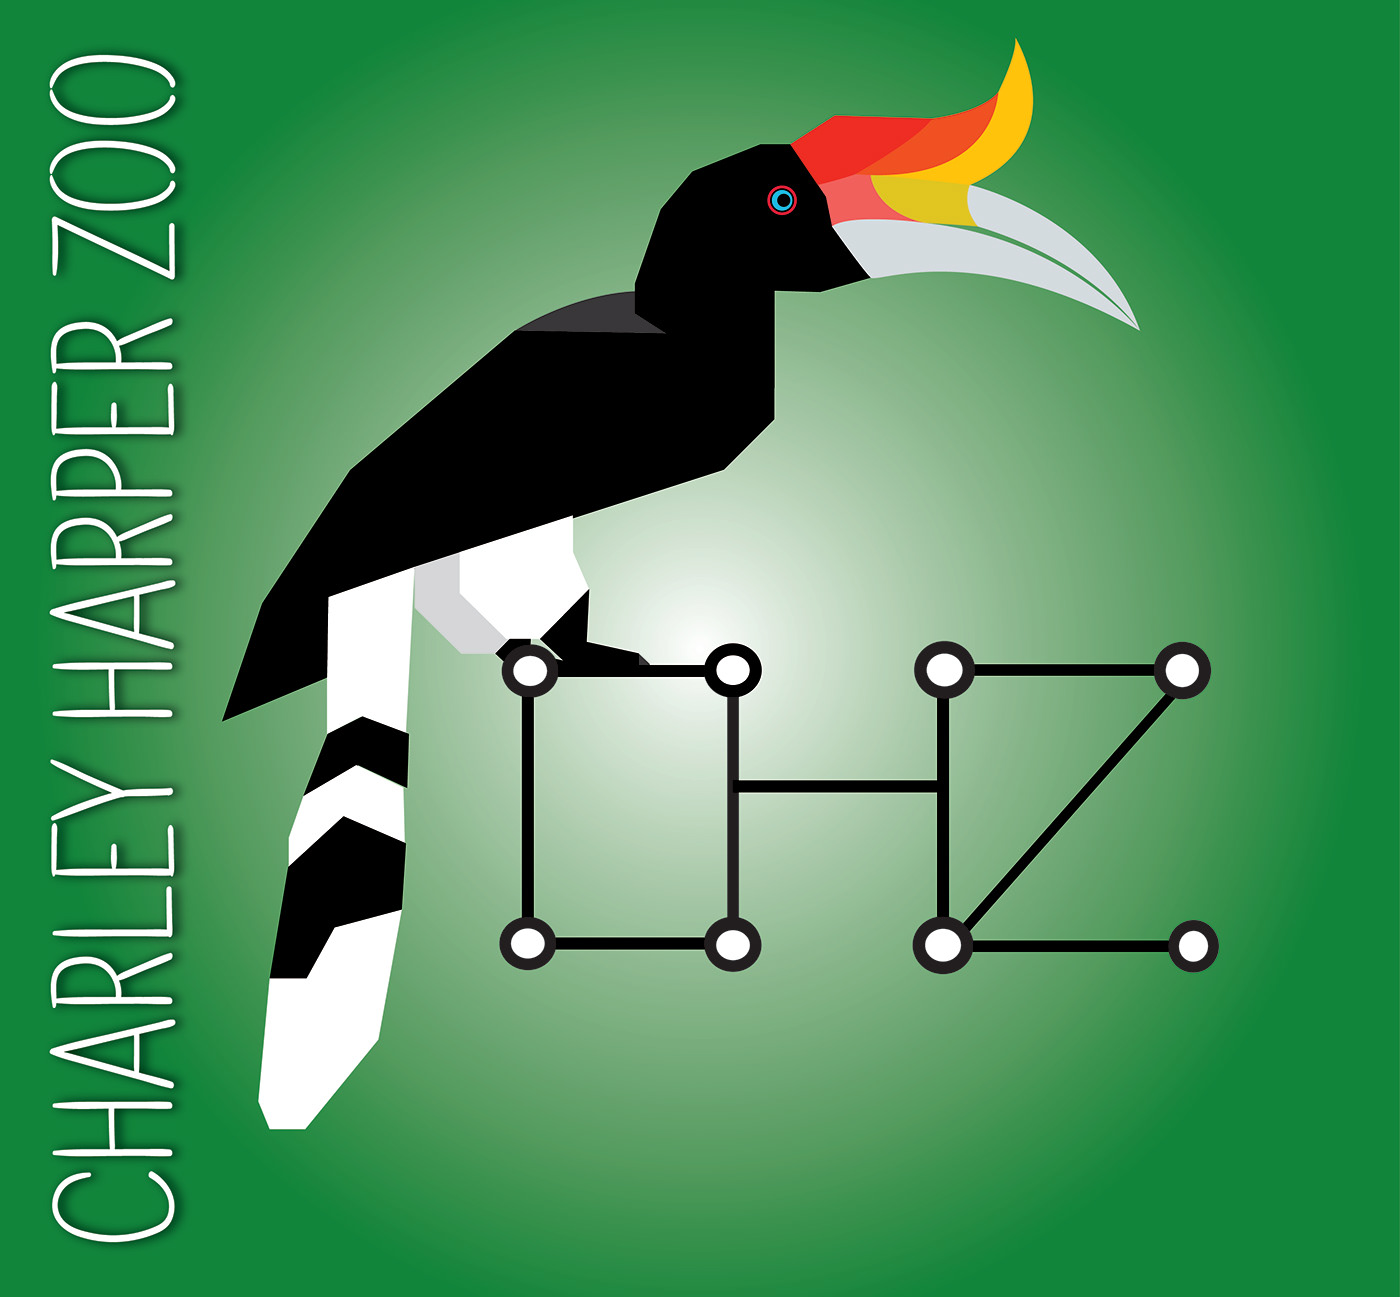 fanart hornbill zoo animals birds Charley Harper wildlife Nature Travel zoos